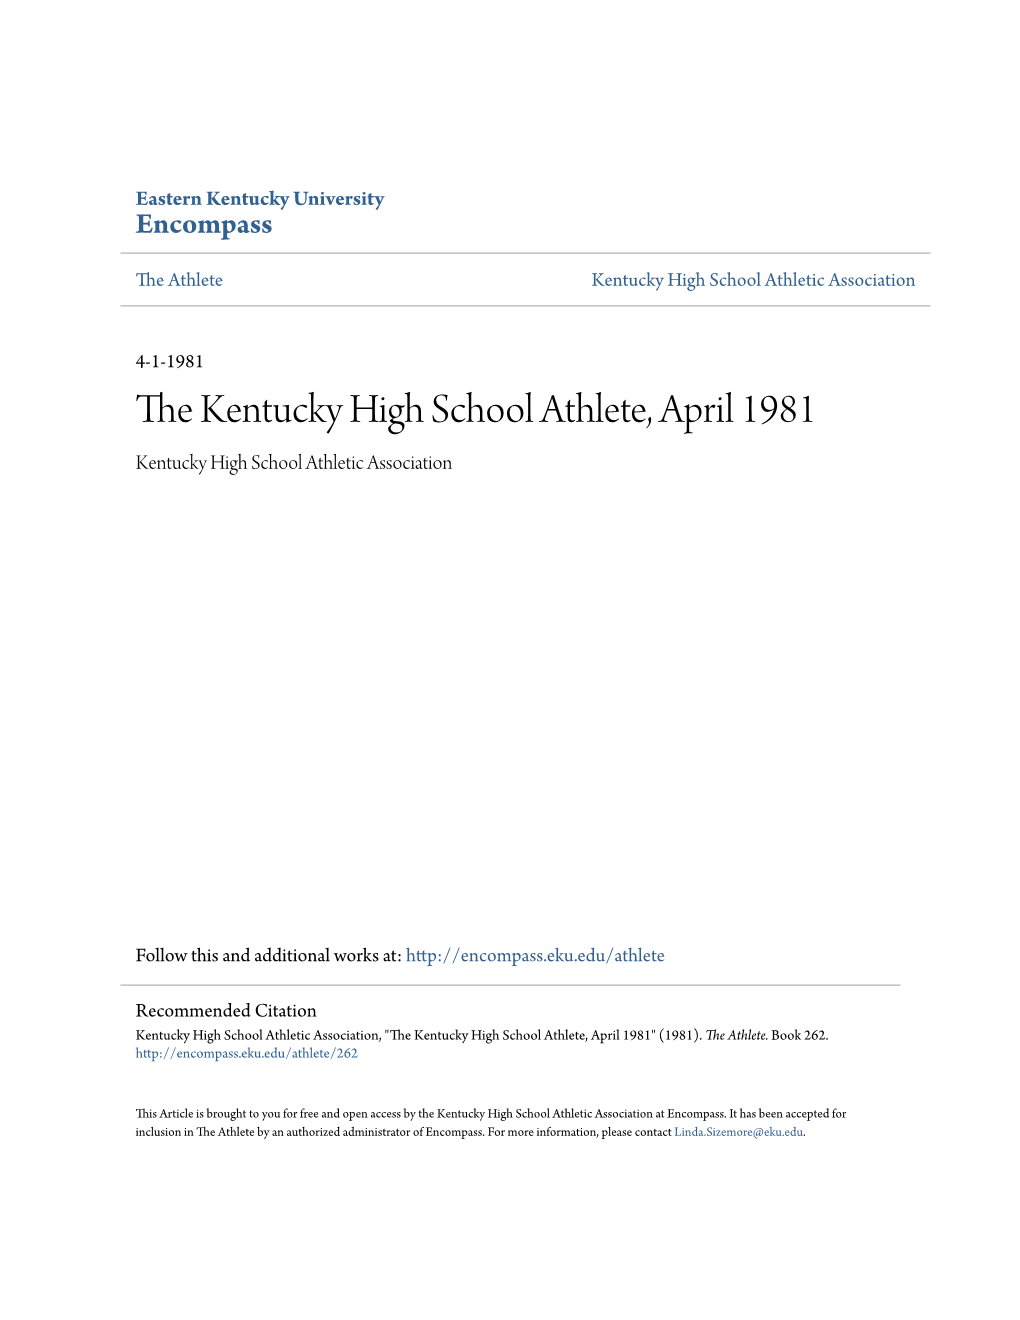 The Kentucky High School Athlete, April 1981 Kentucky High School Athletic Association